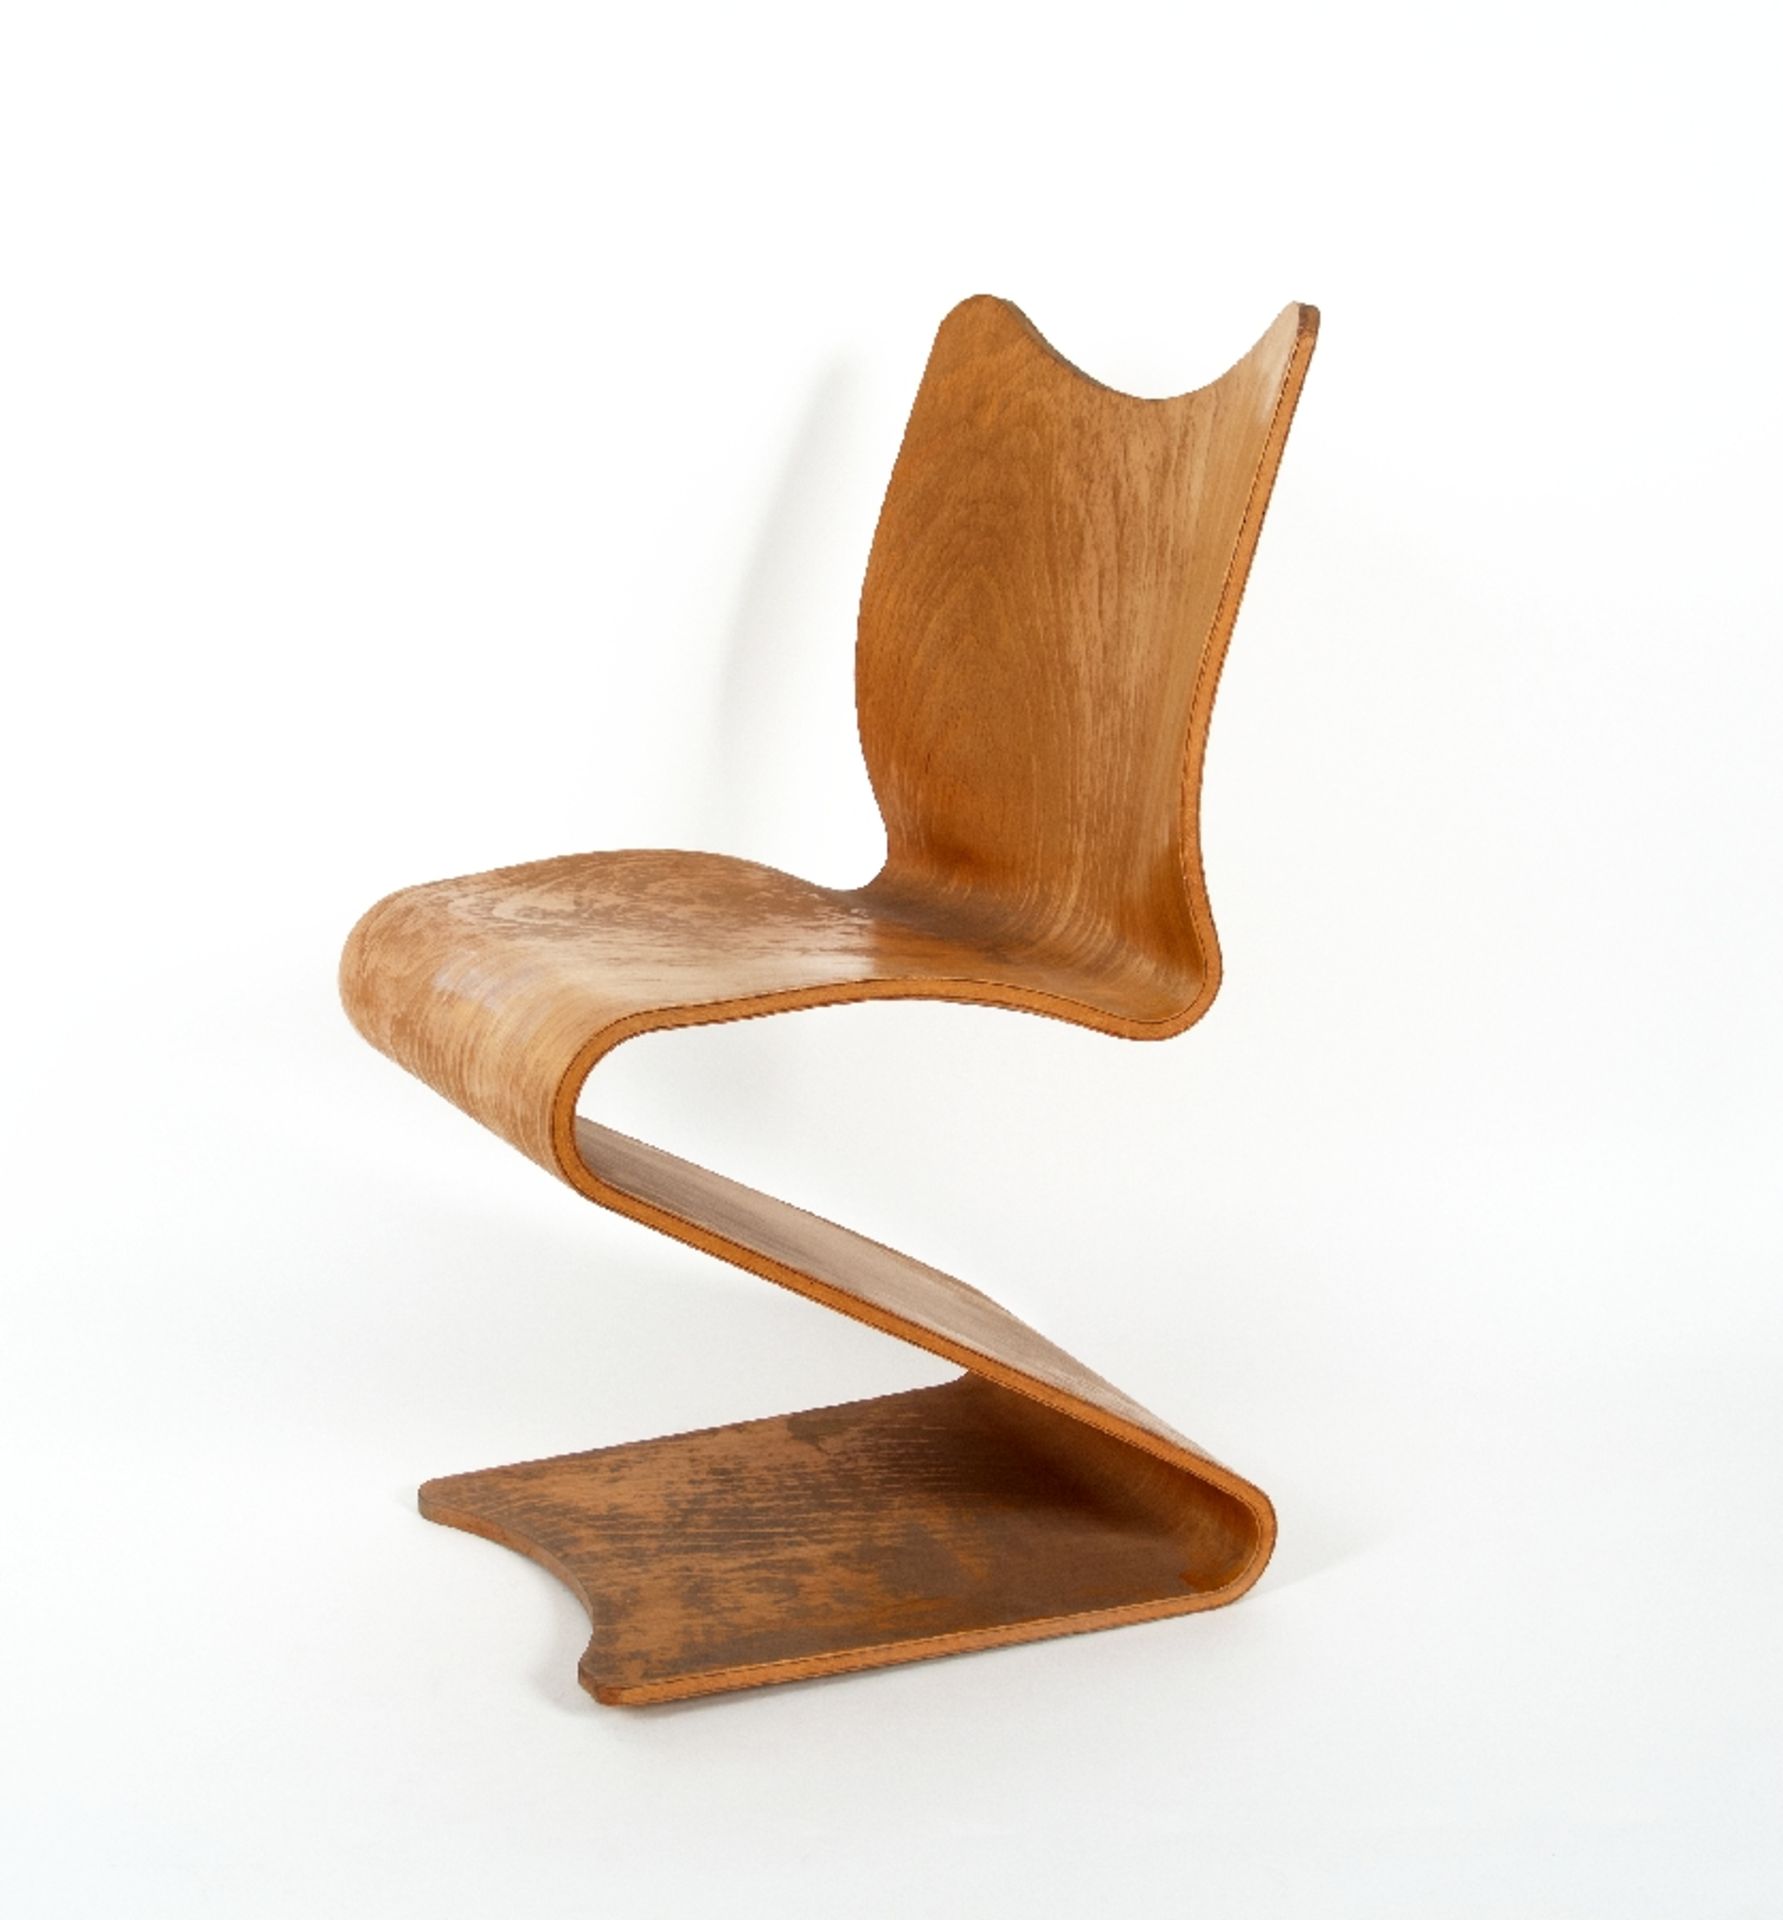 Verner Panton1926 - 1998S-chair, model 275Bentwood, 1965; H 82 cm, W 40 cm, D 45 cm; Manufacturer